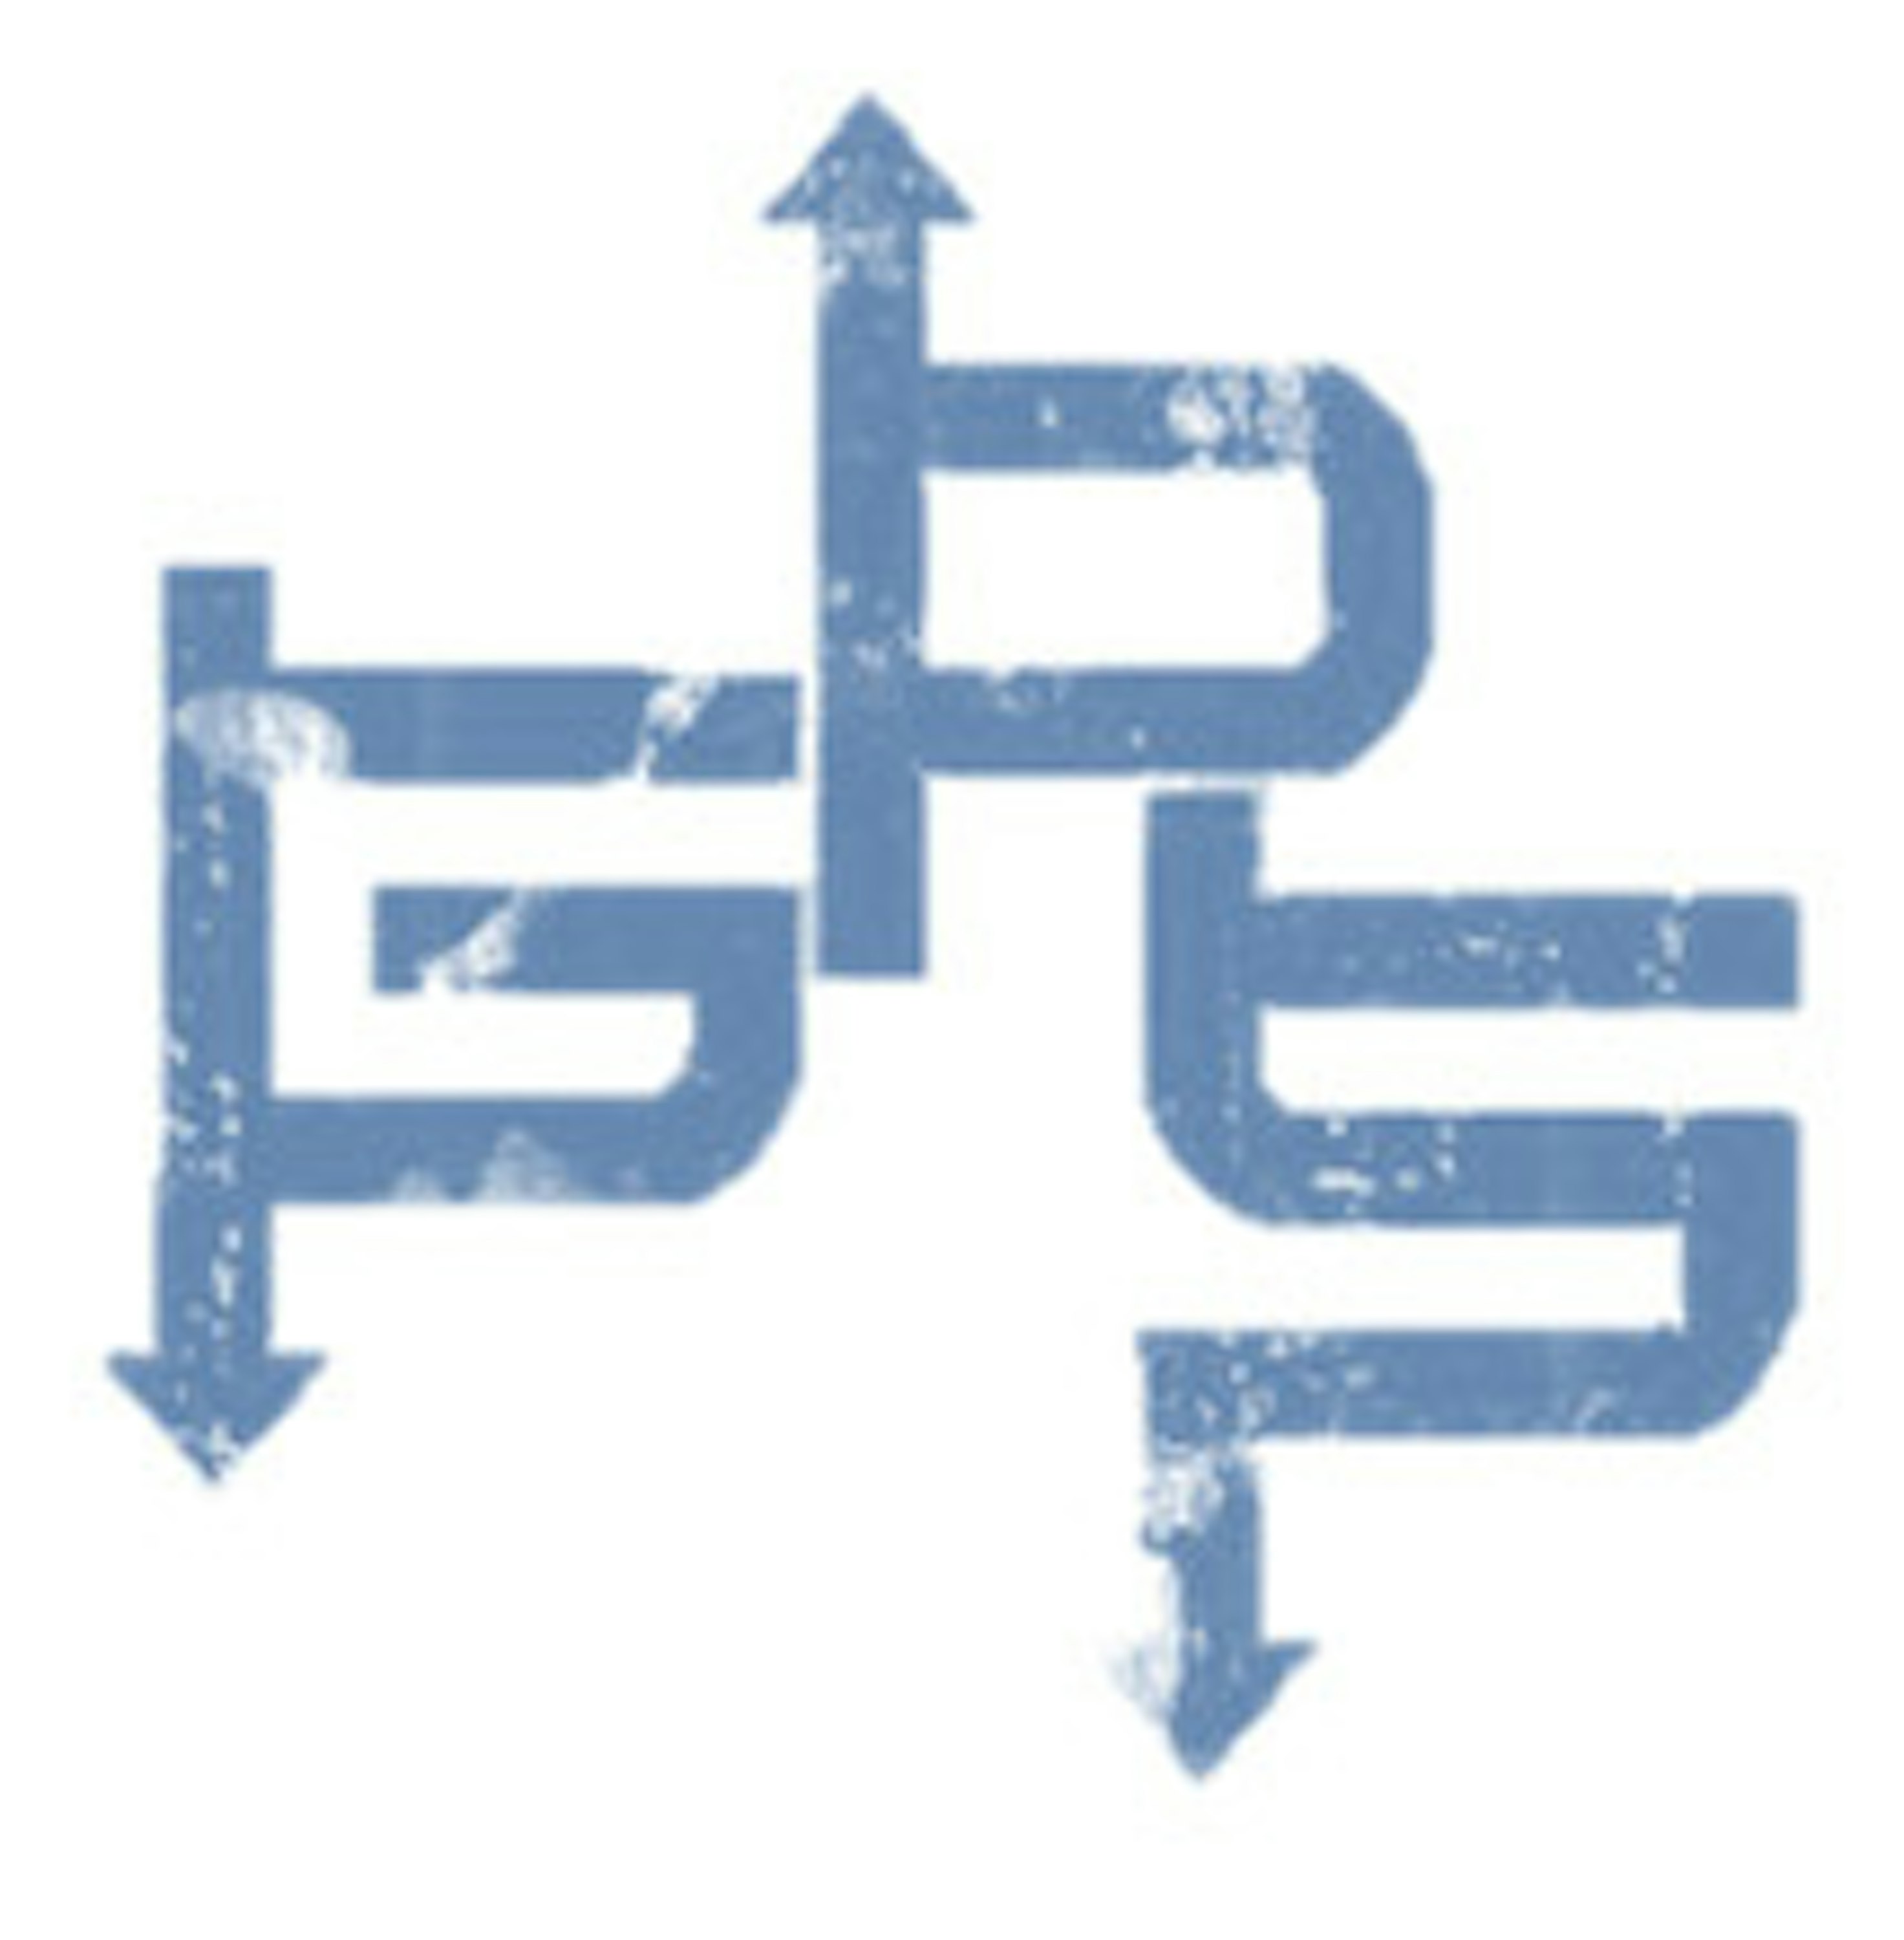 GPS Church cover logo